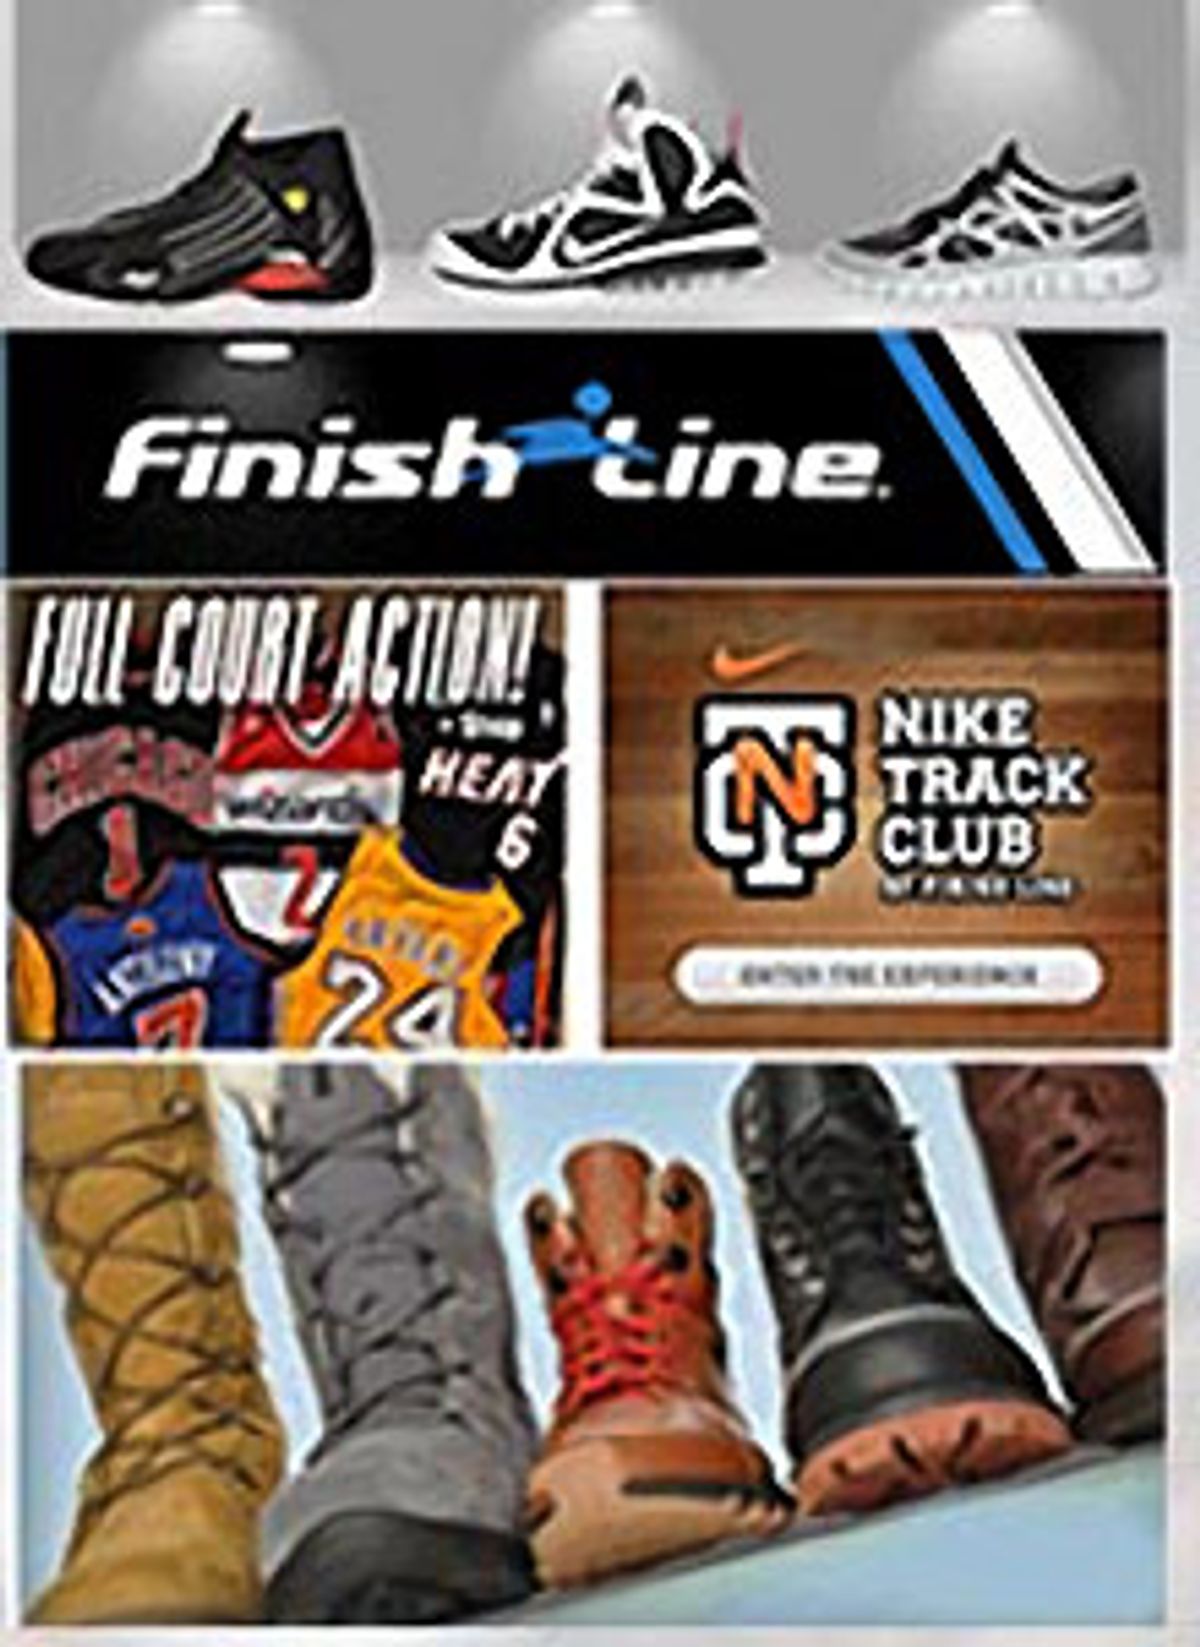 Finish Line store - The best running 